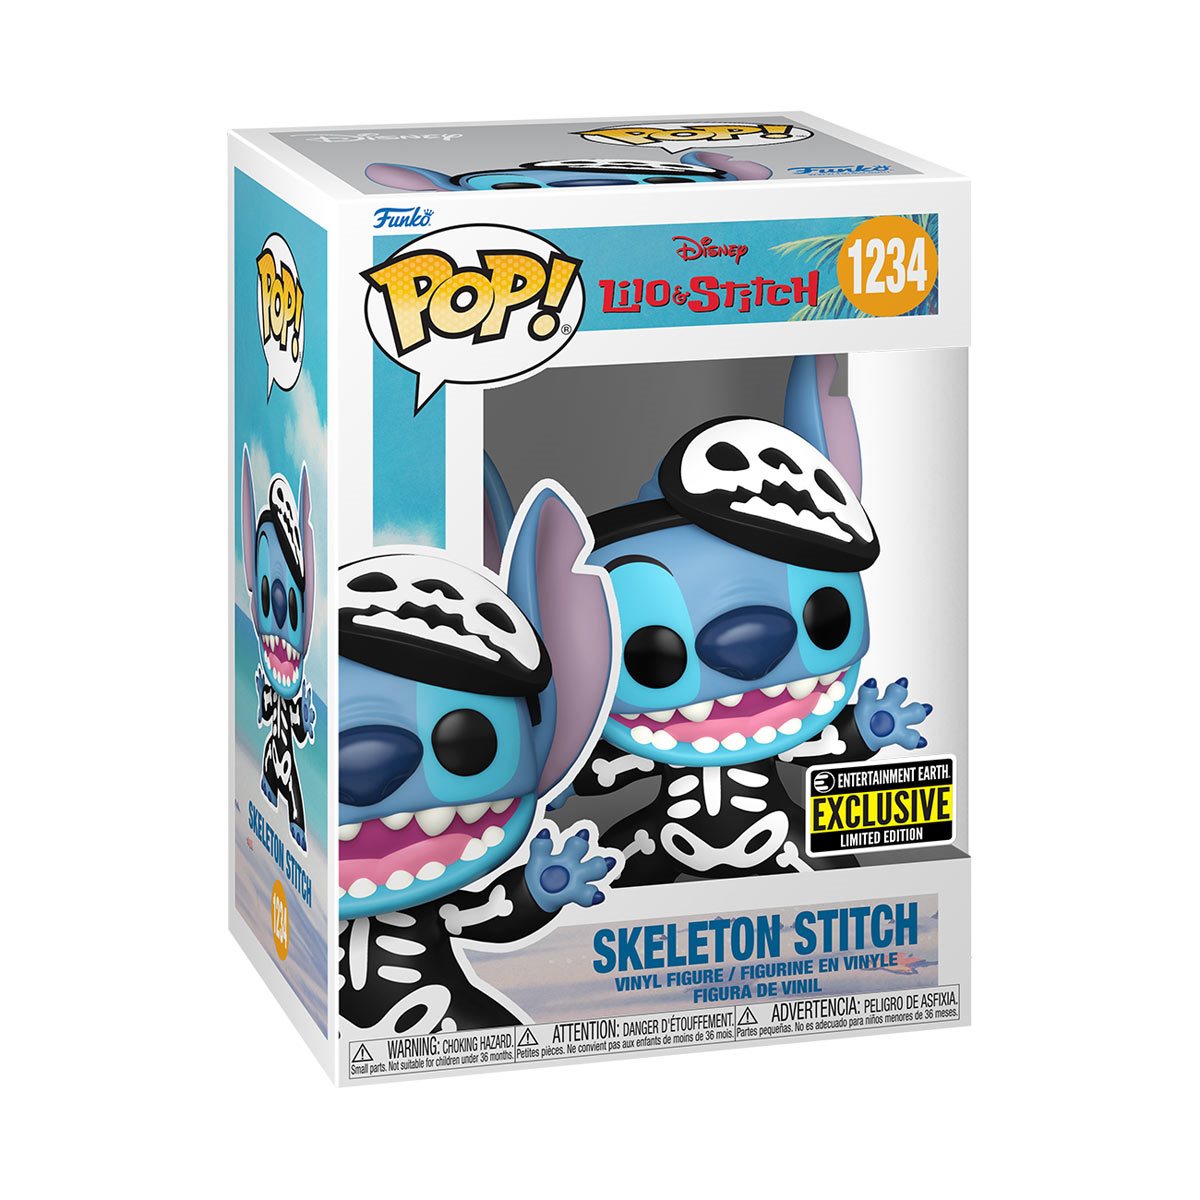 POP! Disney Stitch Skeleton #1234